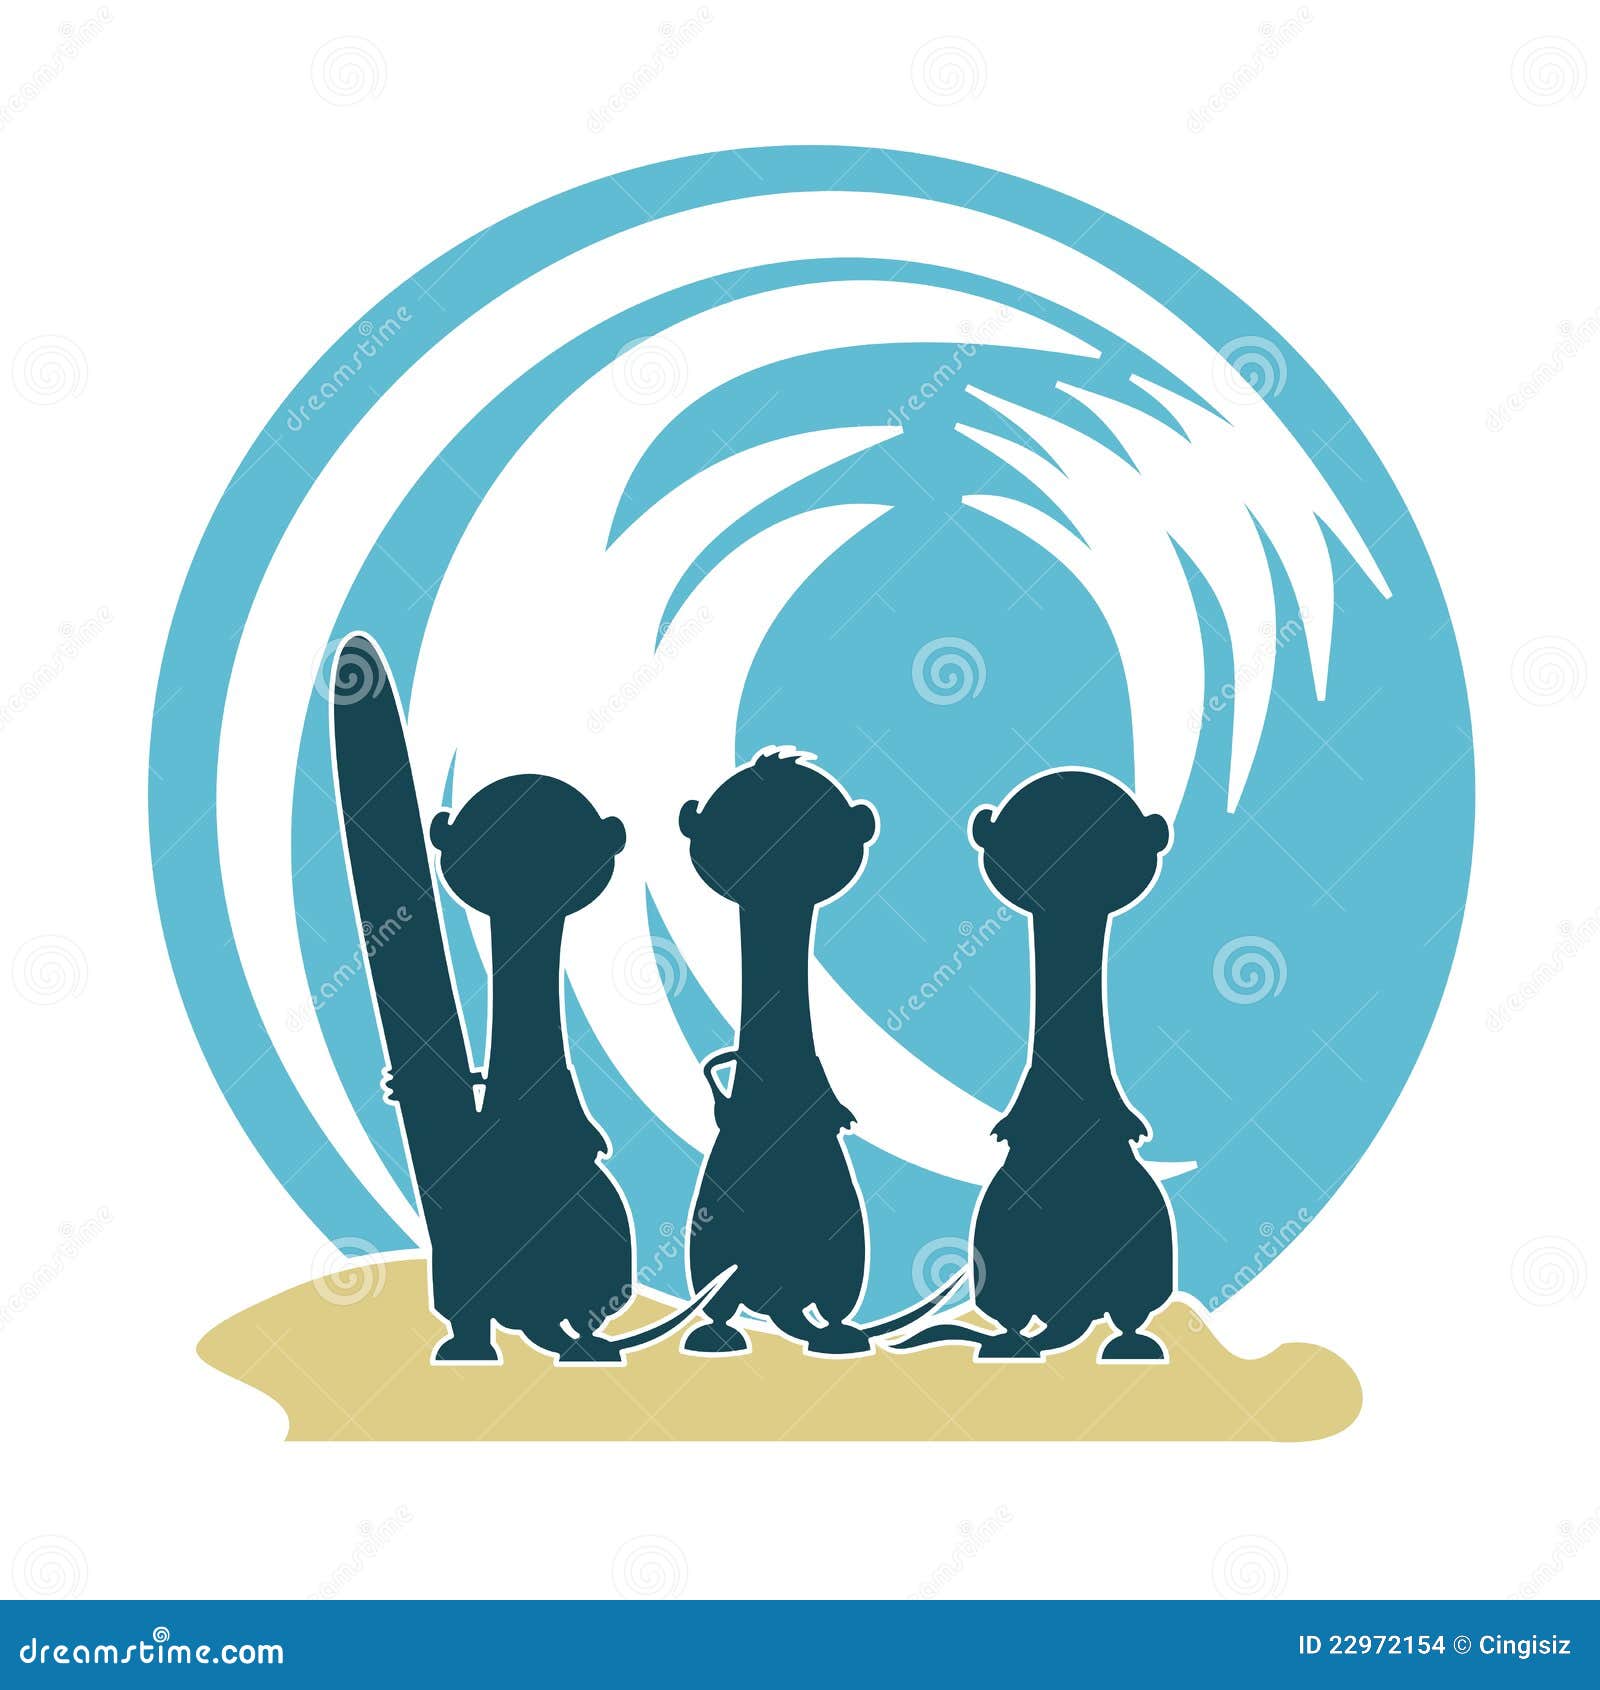 3 meercat surfers & wave